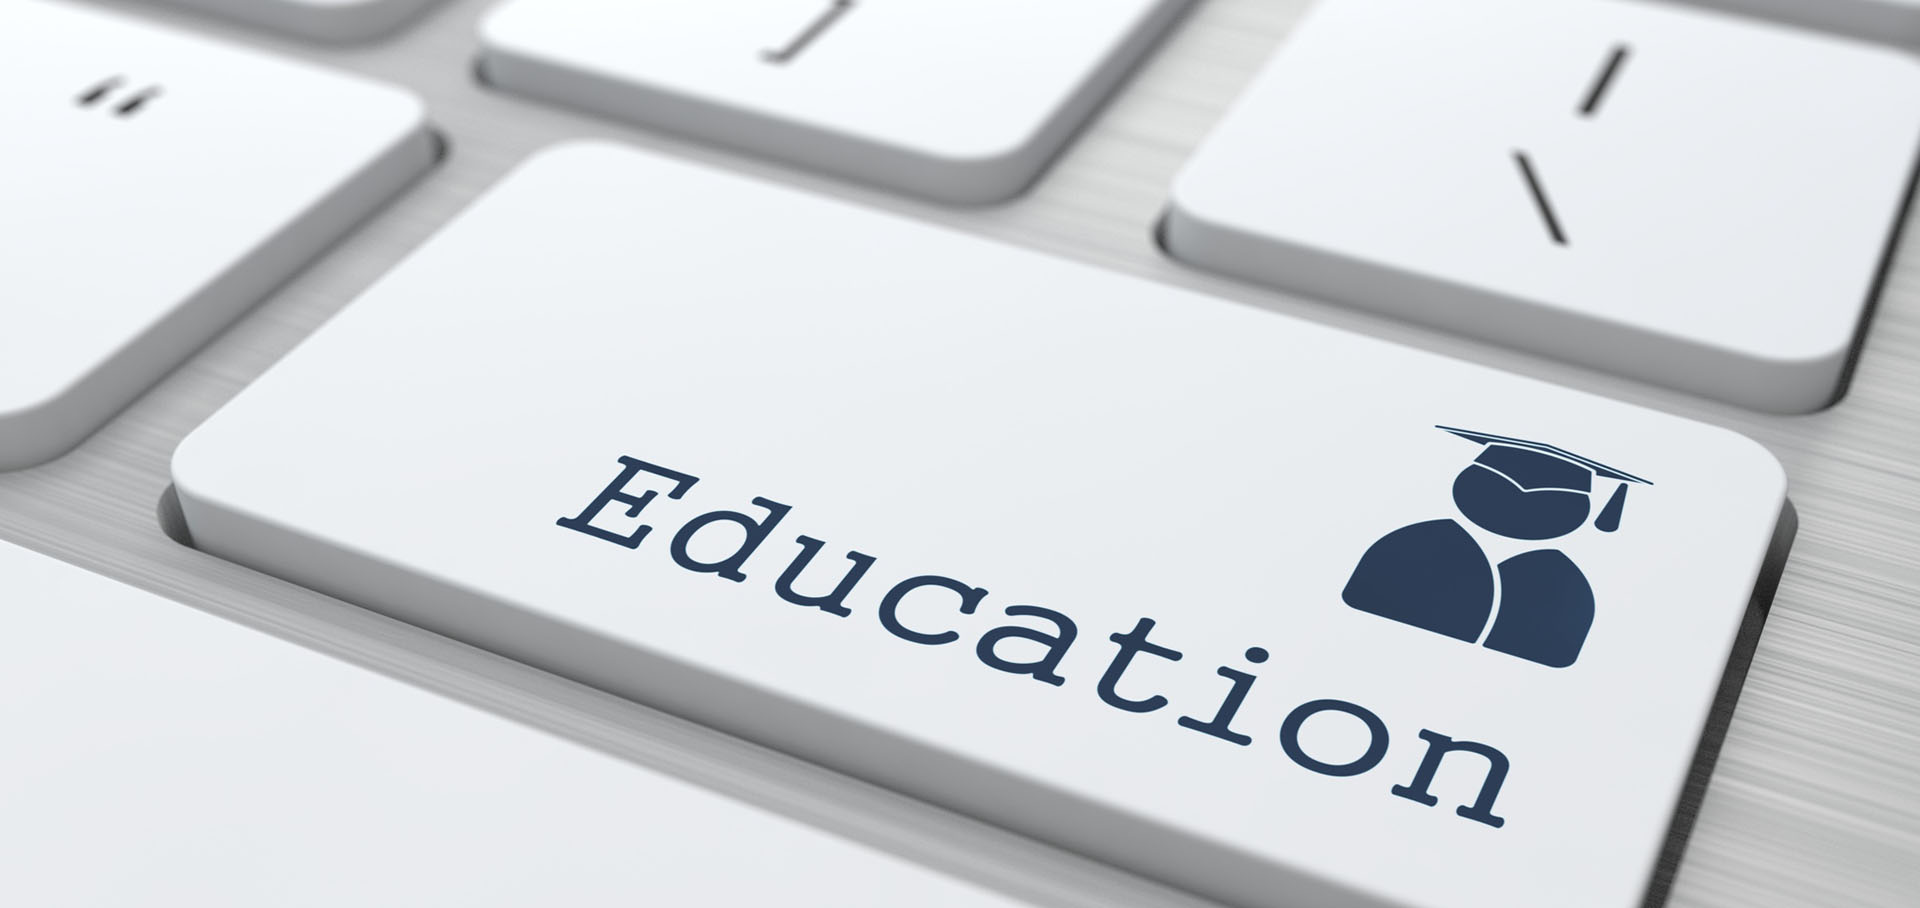 Online Education & Learning